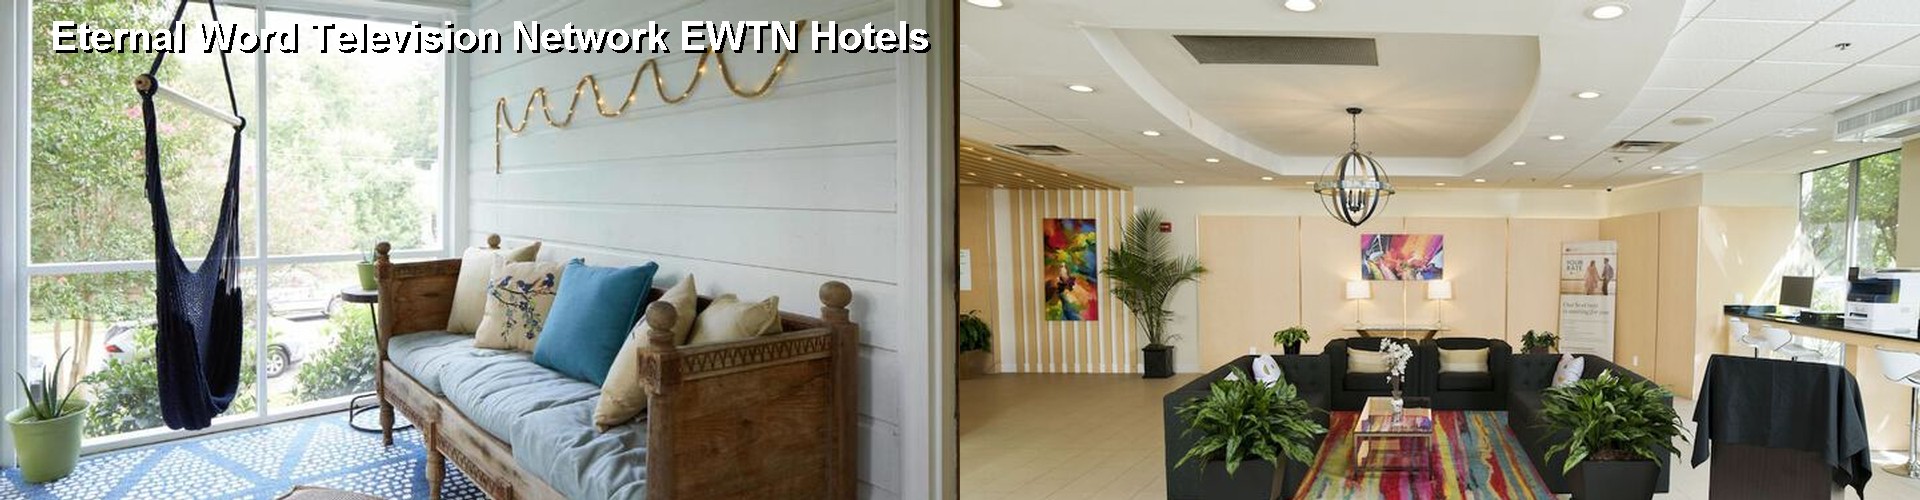 5 Best Hotels near Eternal Word Television Network EWTN